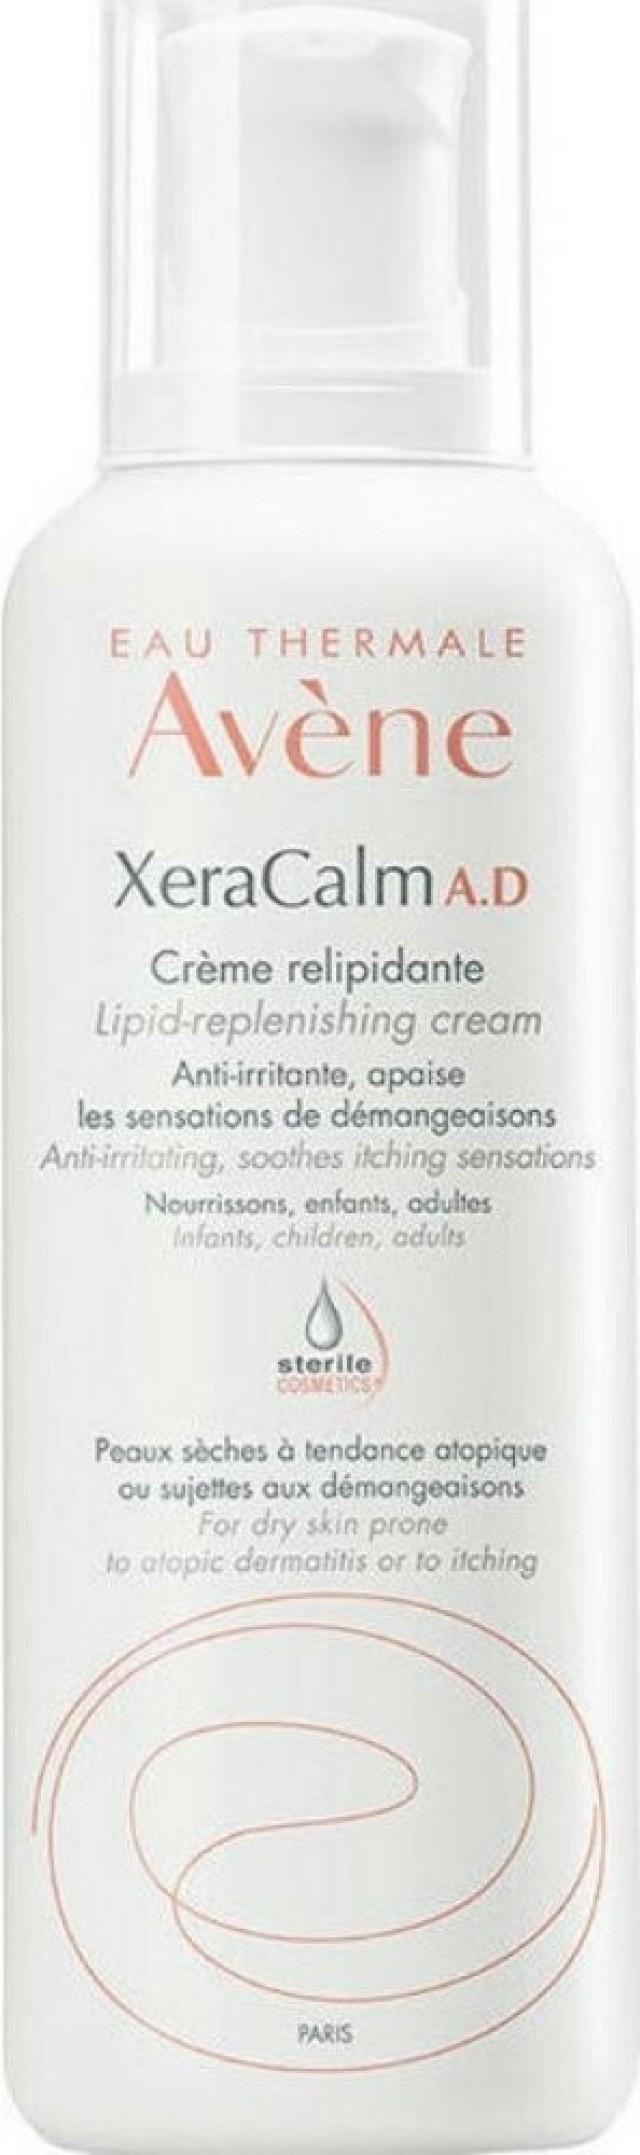 Avene Xeracalm Creme Relipidante Κρέμα για Αναπλήρωση των Λιπιδίων - Ξηρό Δέρμα με Τάση Κνησμού & Ατοπίας 400ml